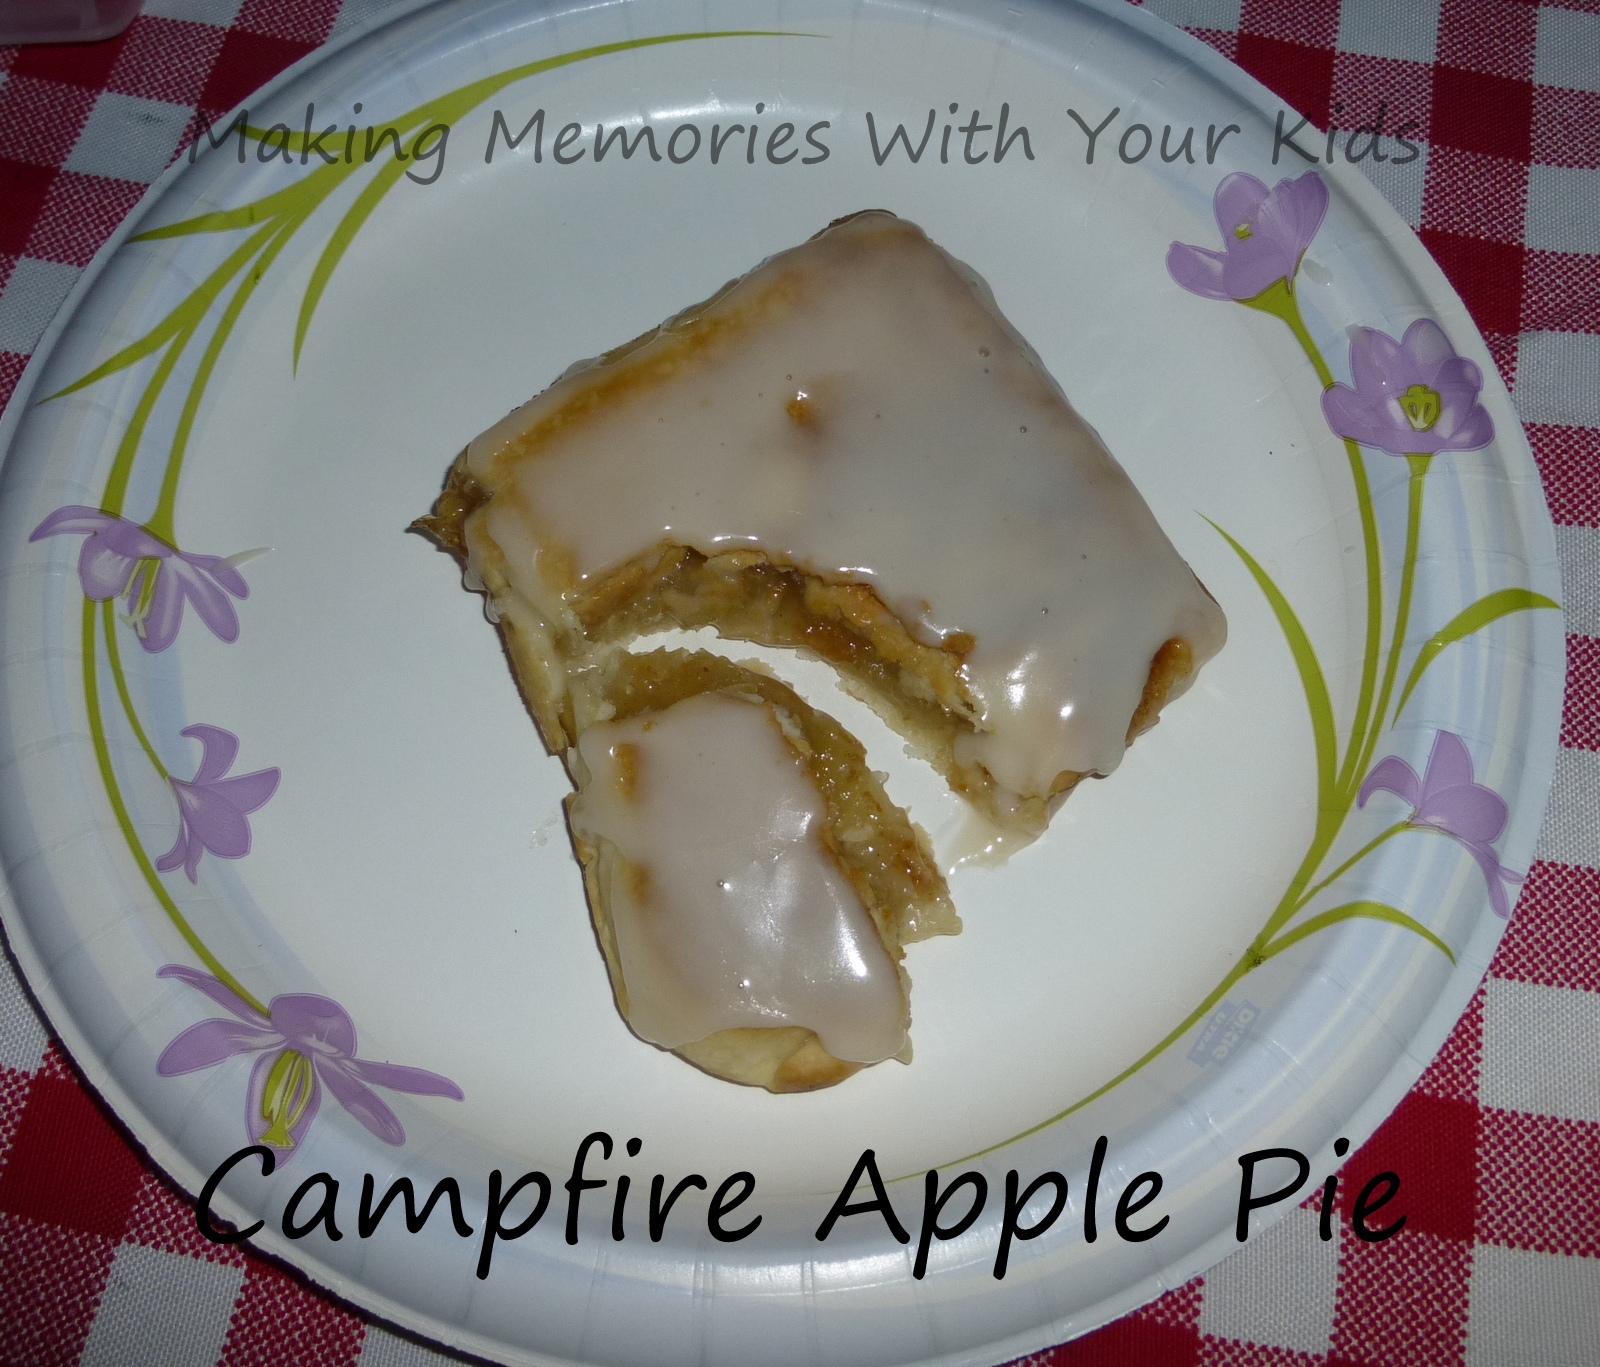 http://makingmemorieswithyourkids.com/wp-content/uploads/2013/07/campfire-apple-pie.jpg